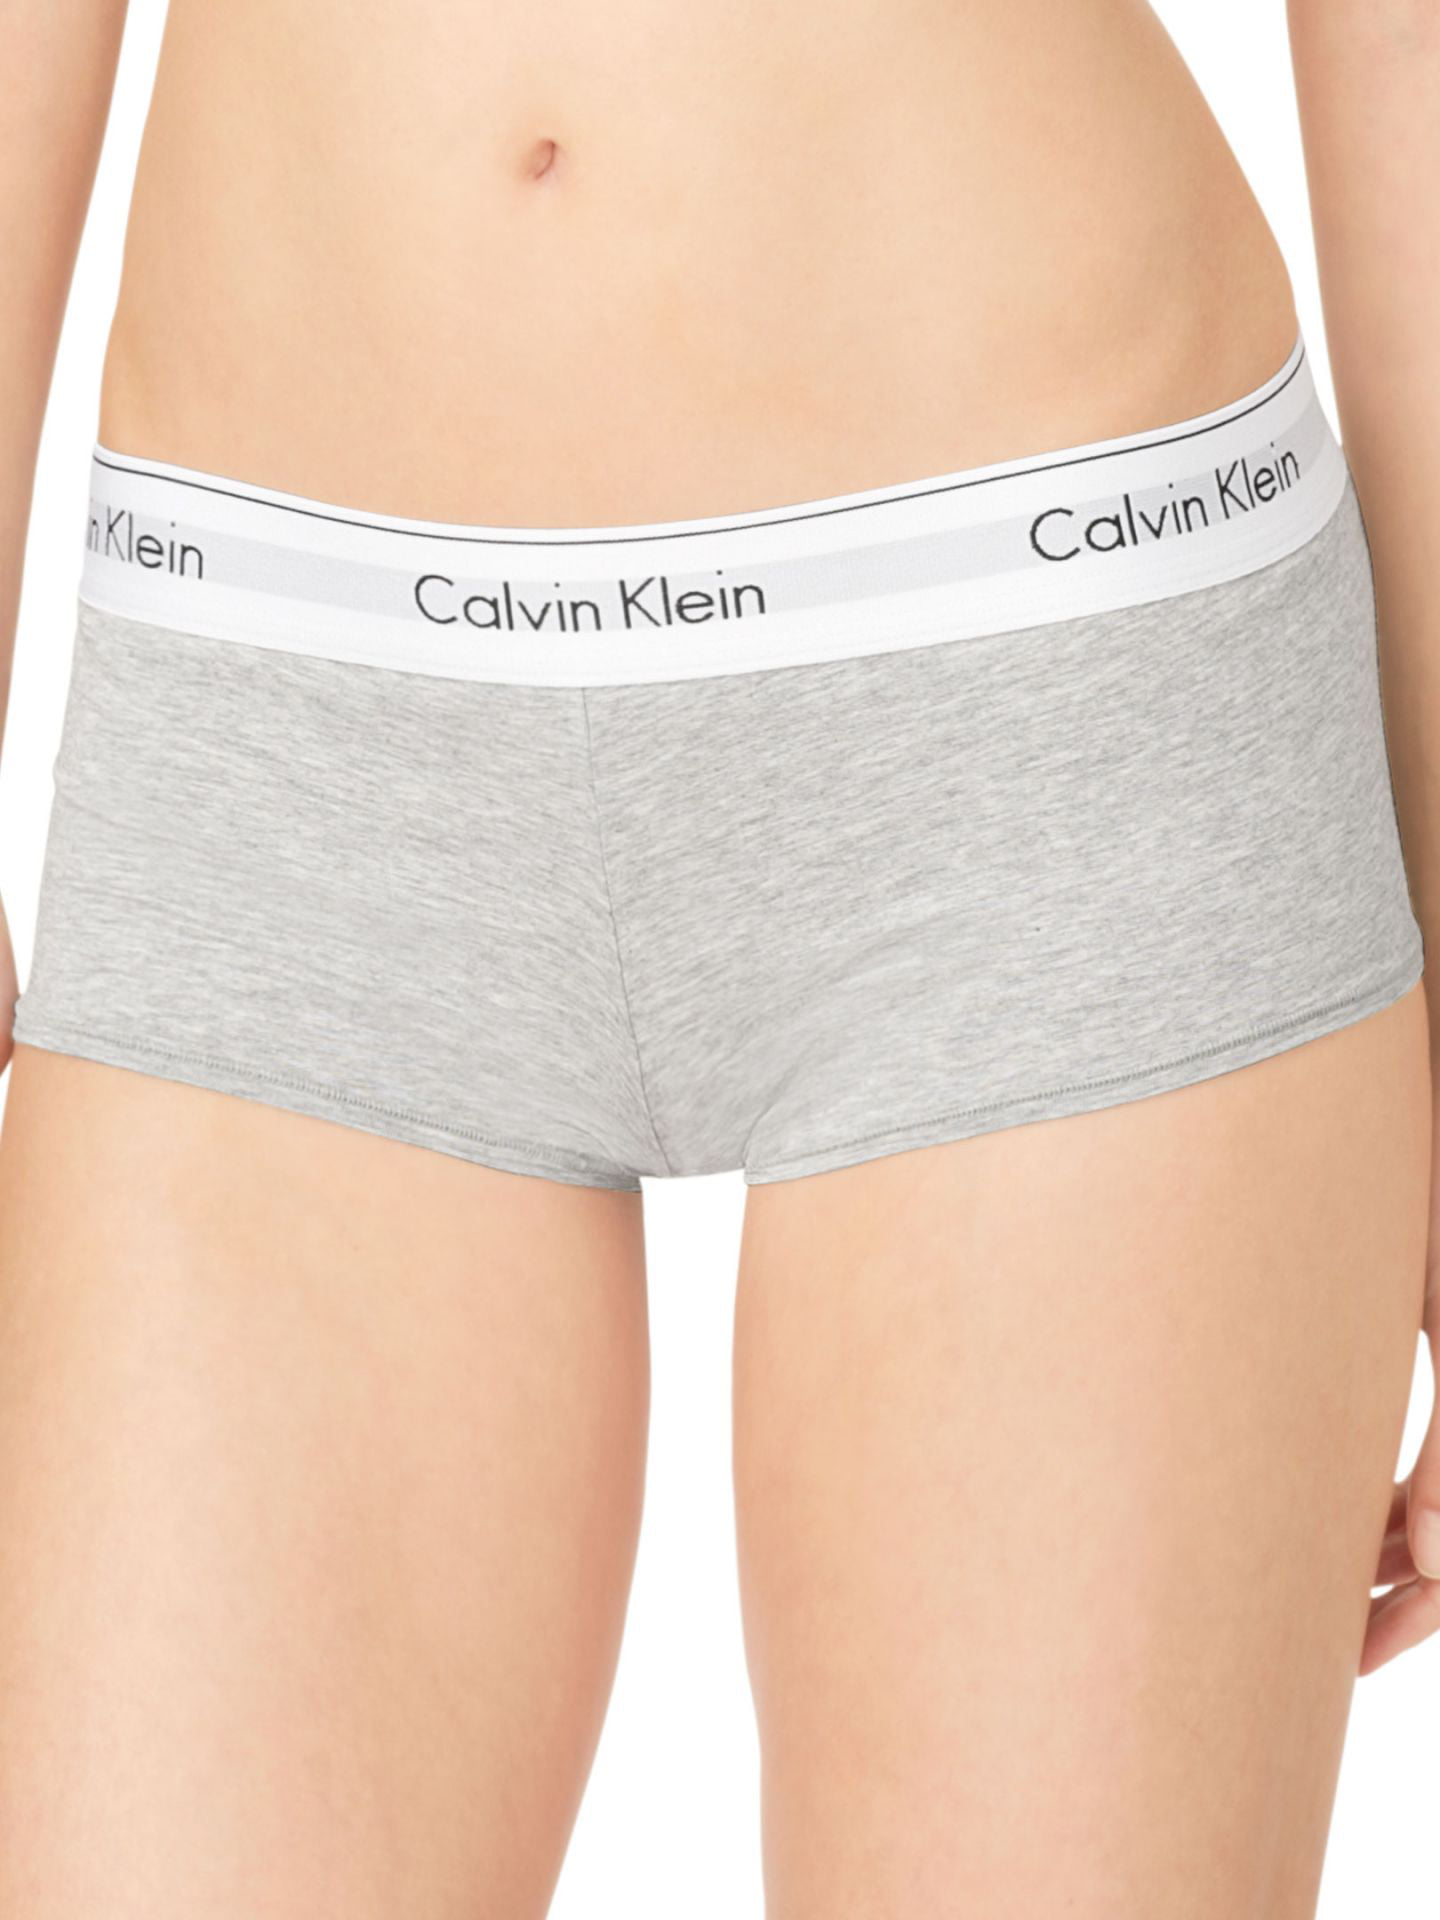 Calvin Klein Boyshorts & Hipster Panties for Women - Bloomingdale's